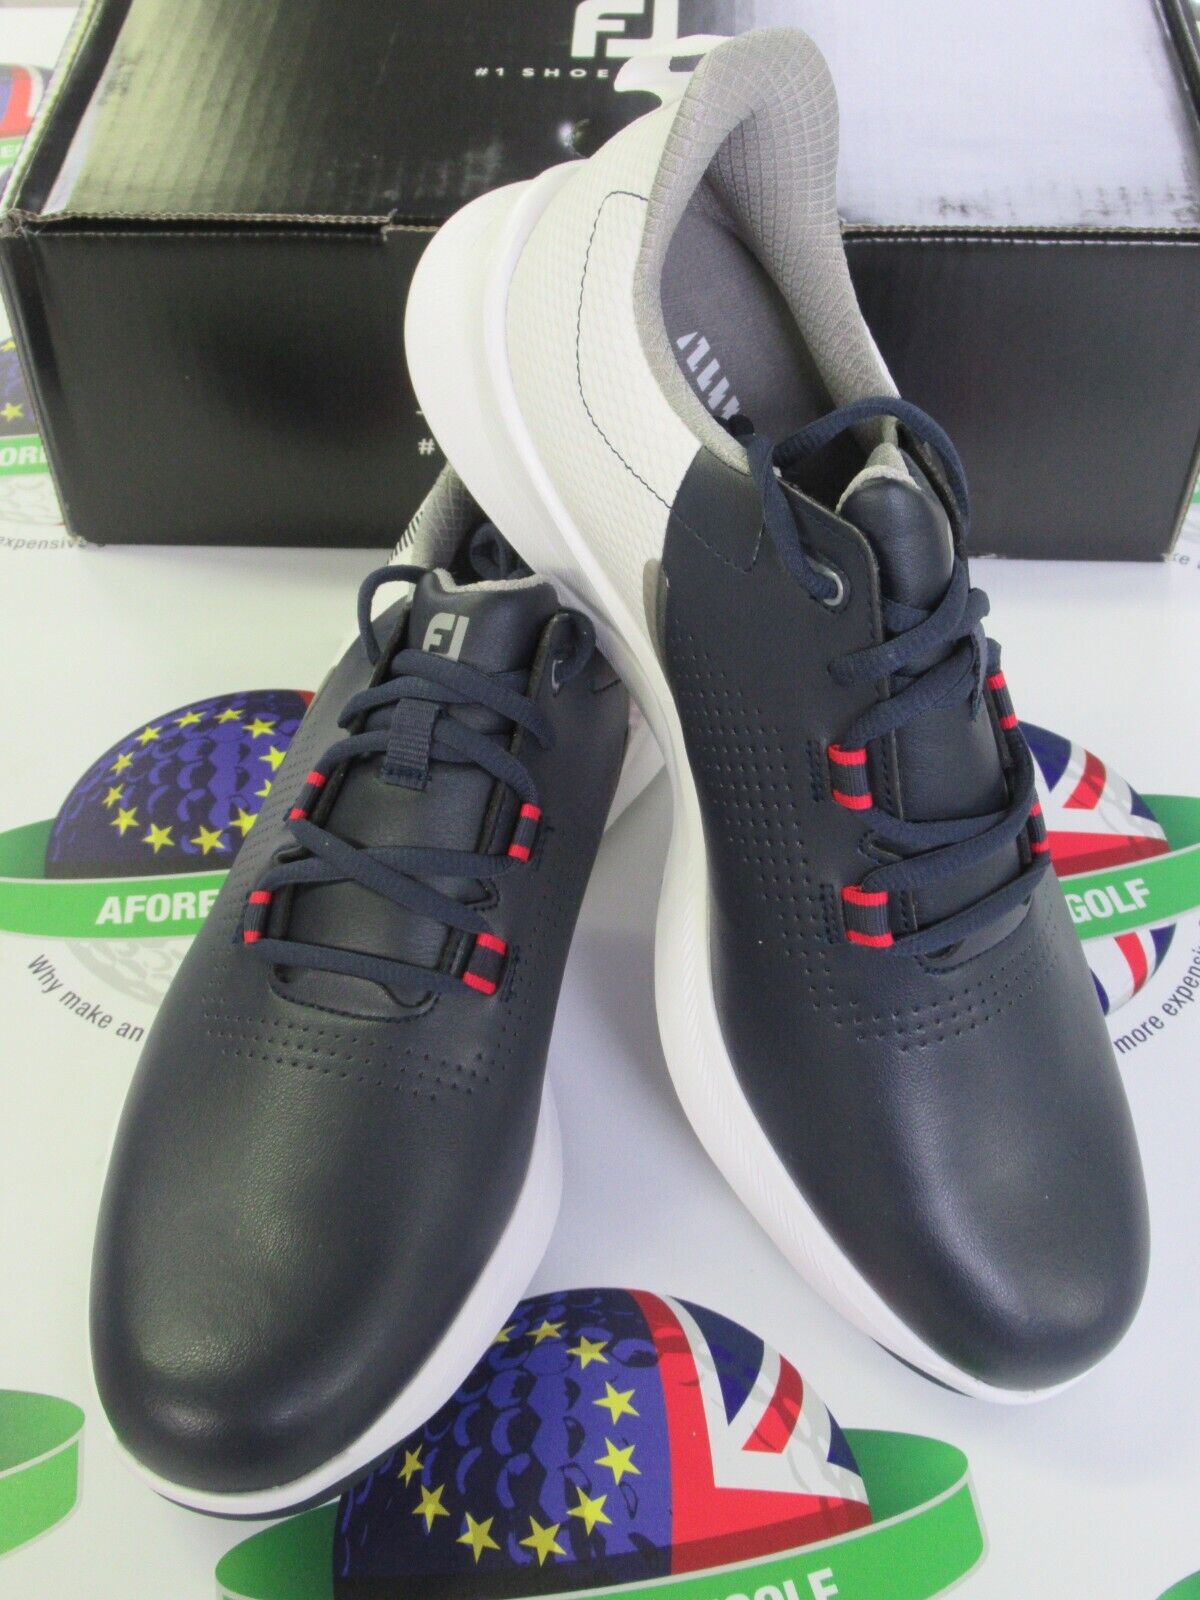 footjoy fj fuel waterproof golf shoes 55442k navy/white uk size 9 medium